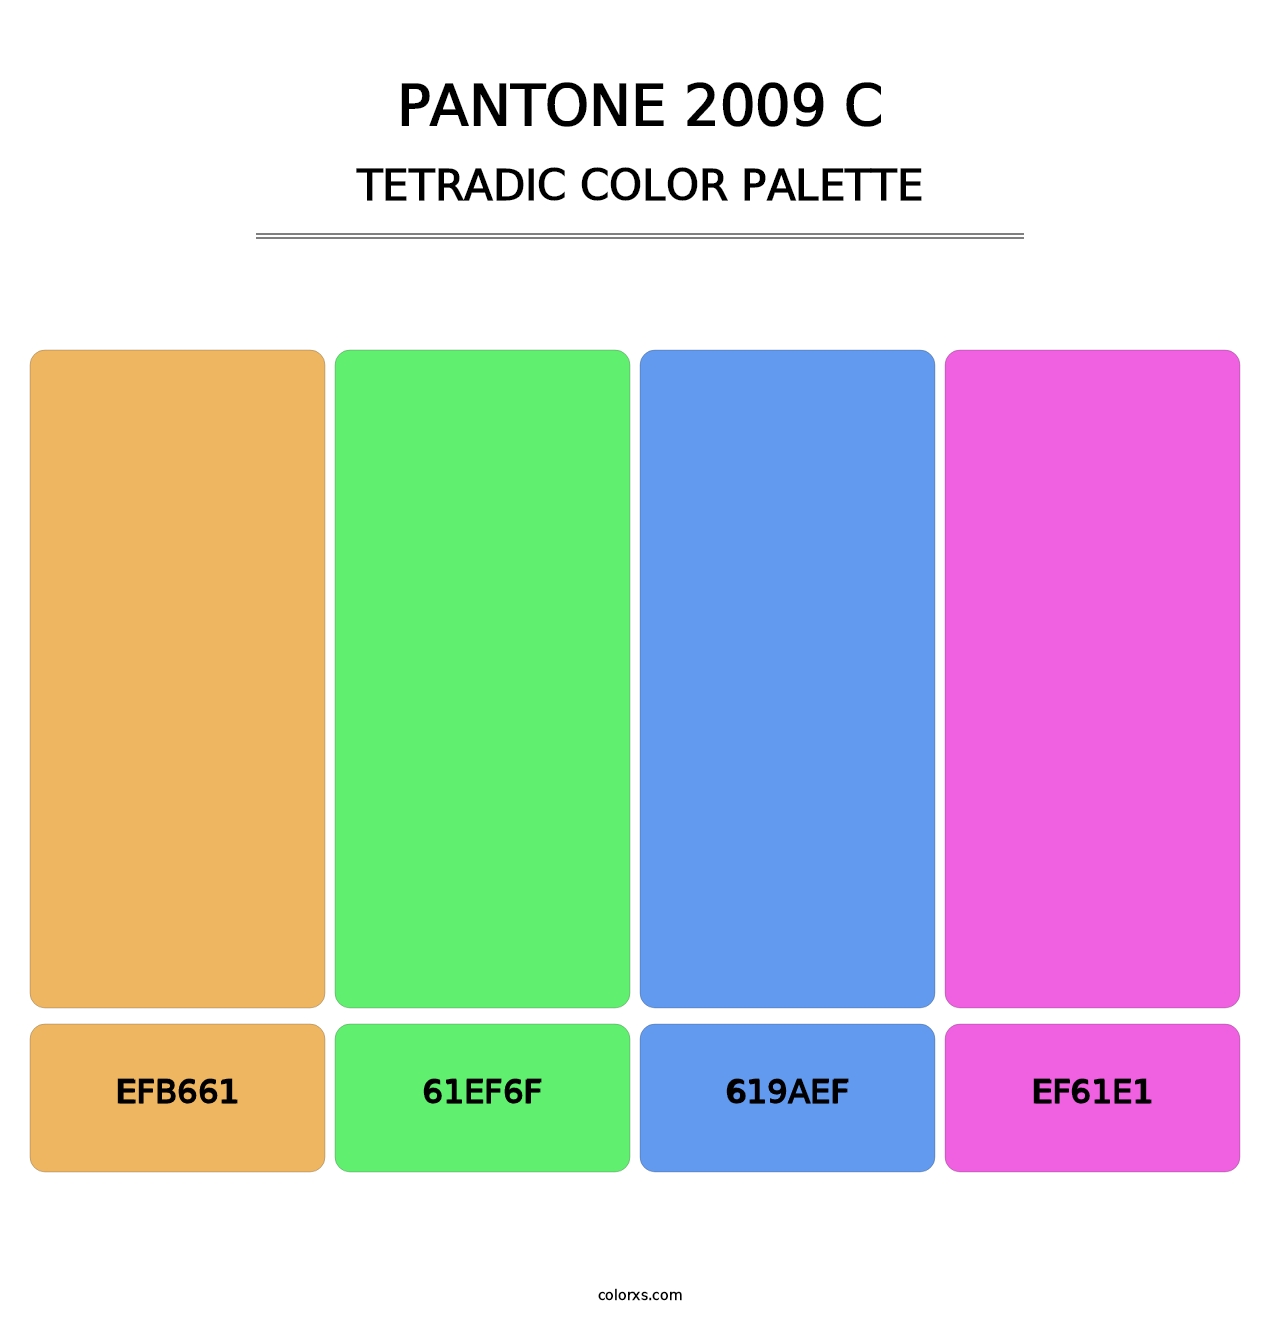 PANTONE 2009 C - Tetradic Color Palette